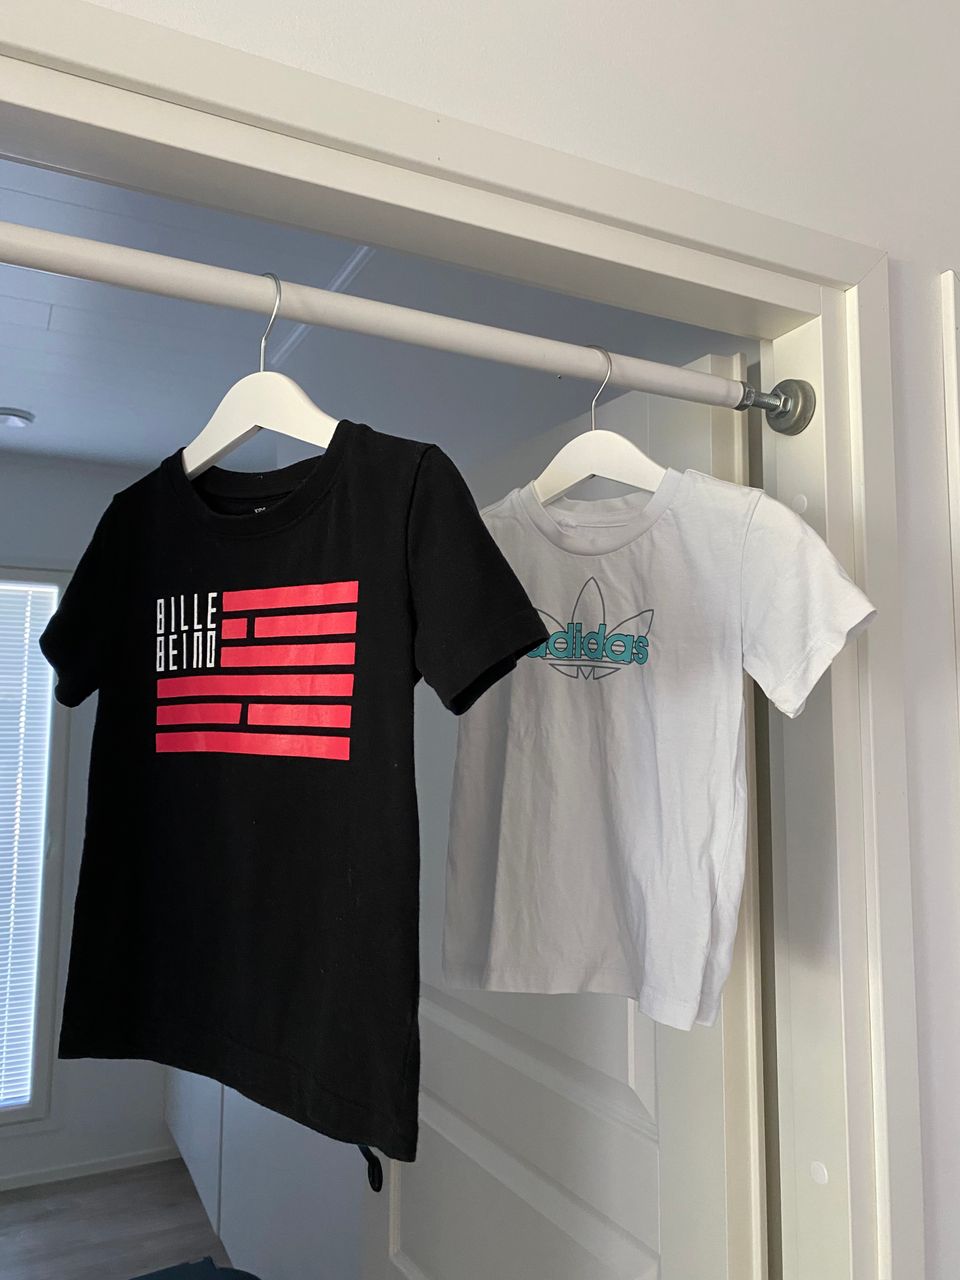 BilleBeino ja Adidas t-paidat